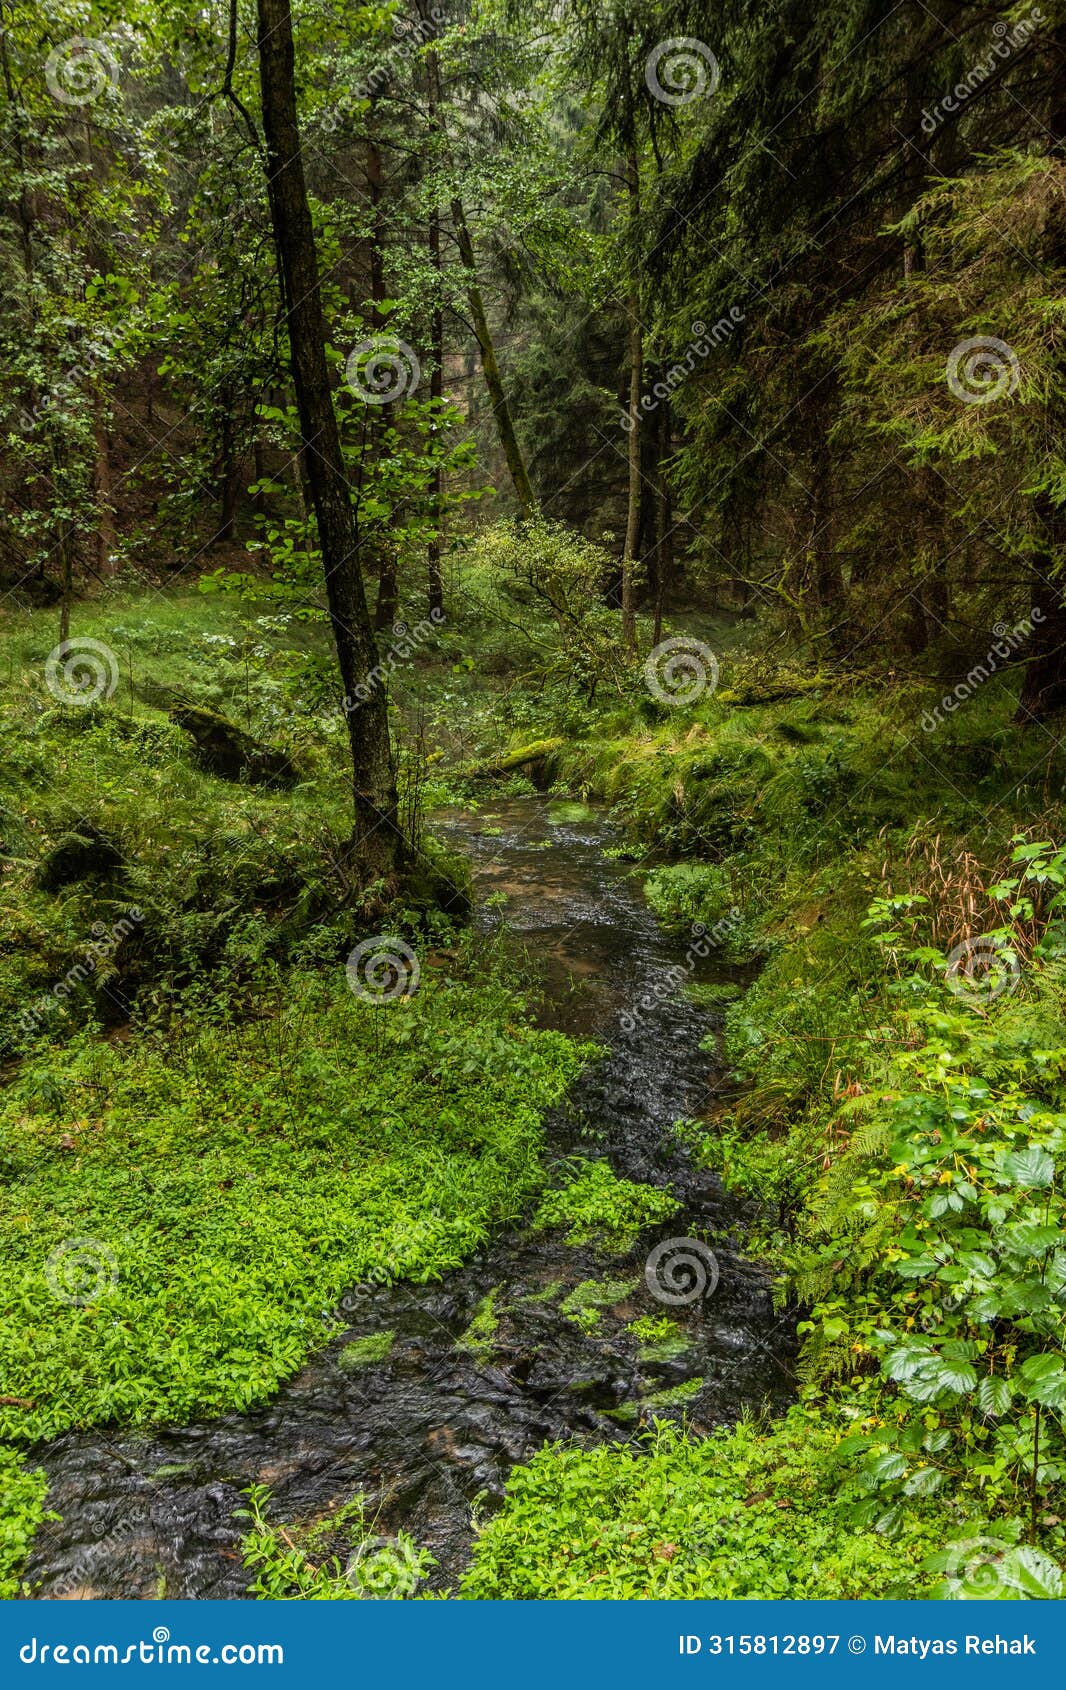 jetrichovicka bela stream in the czech switzerland national park, czech republ